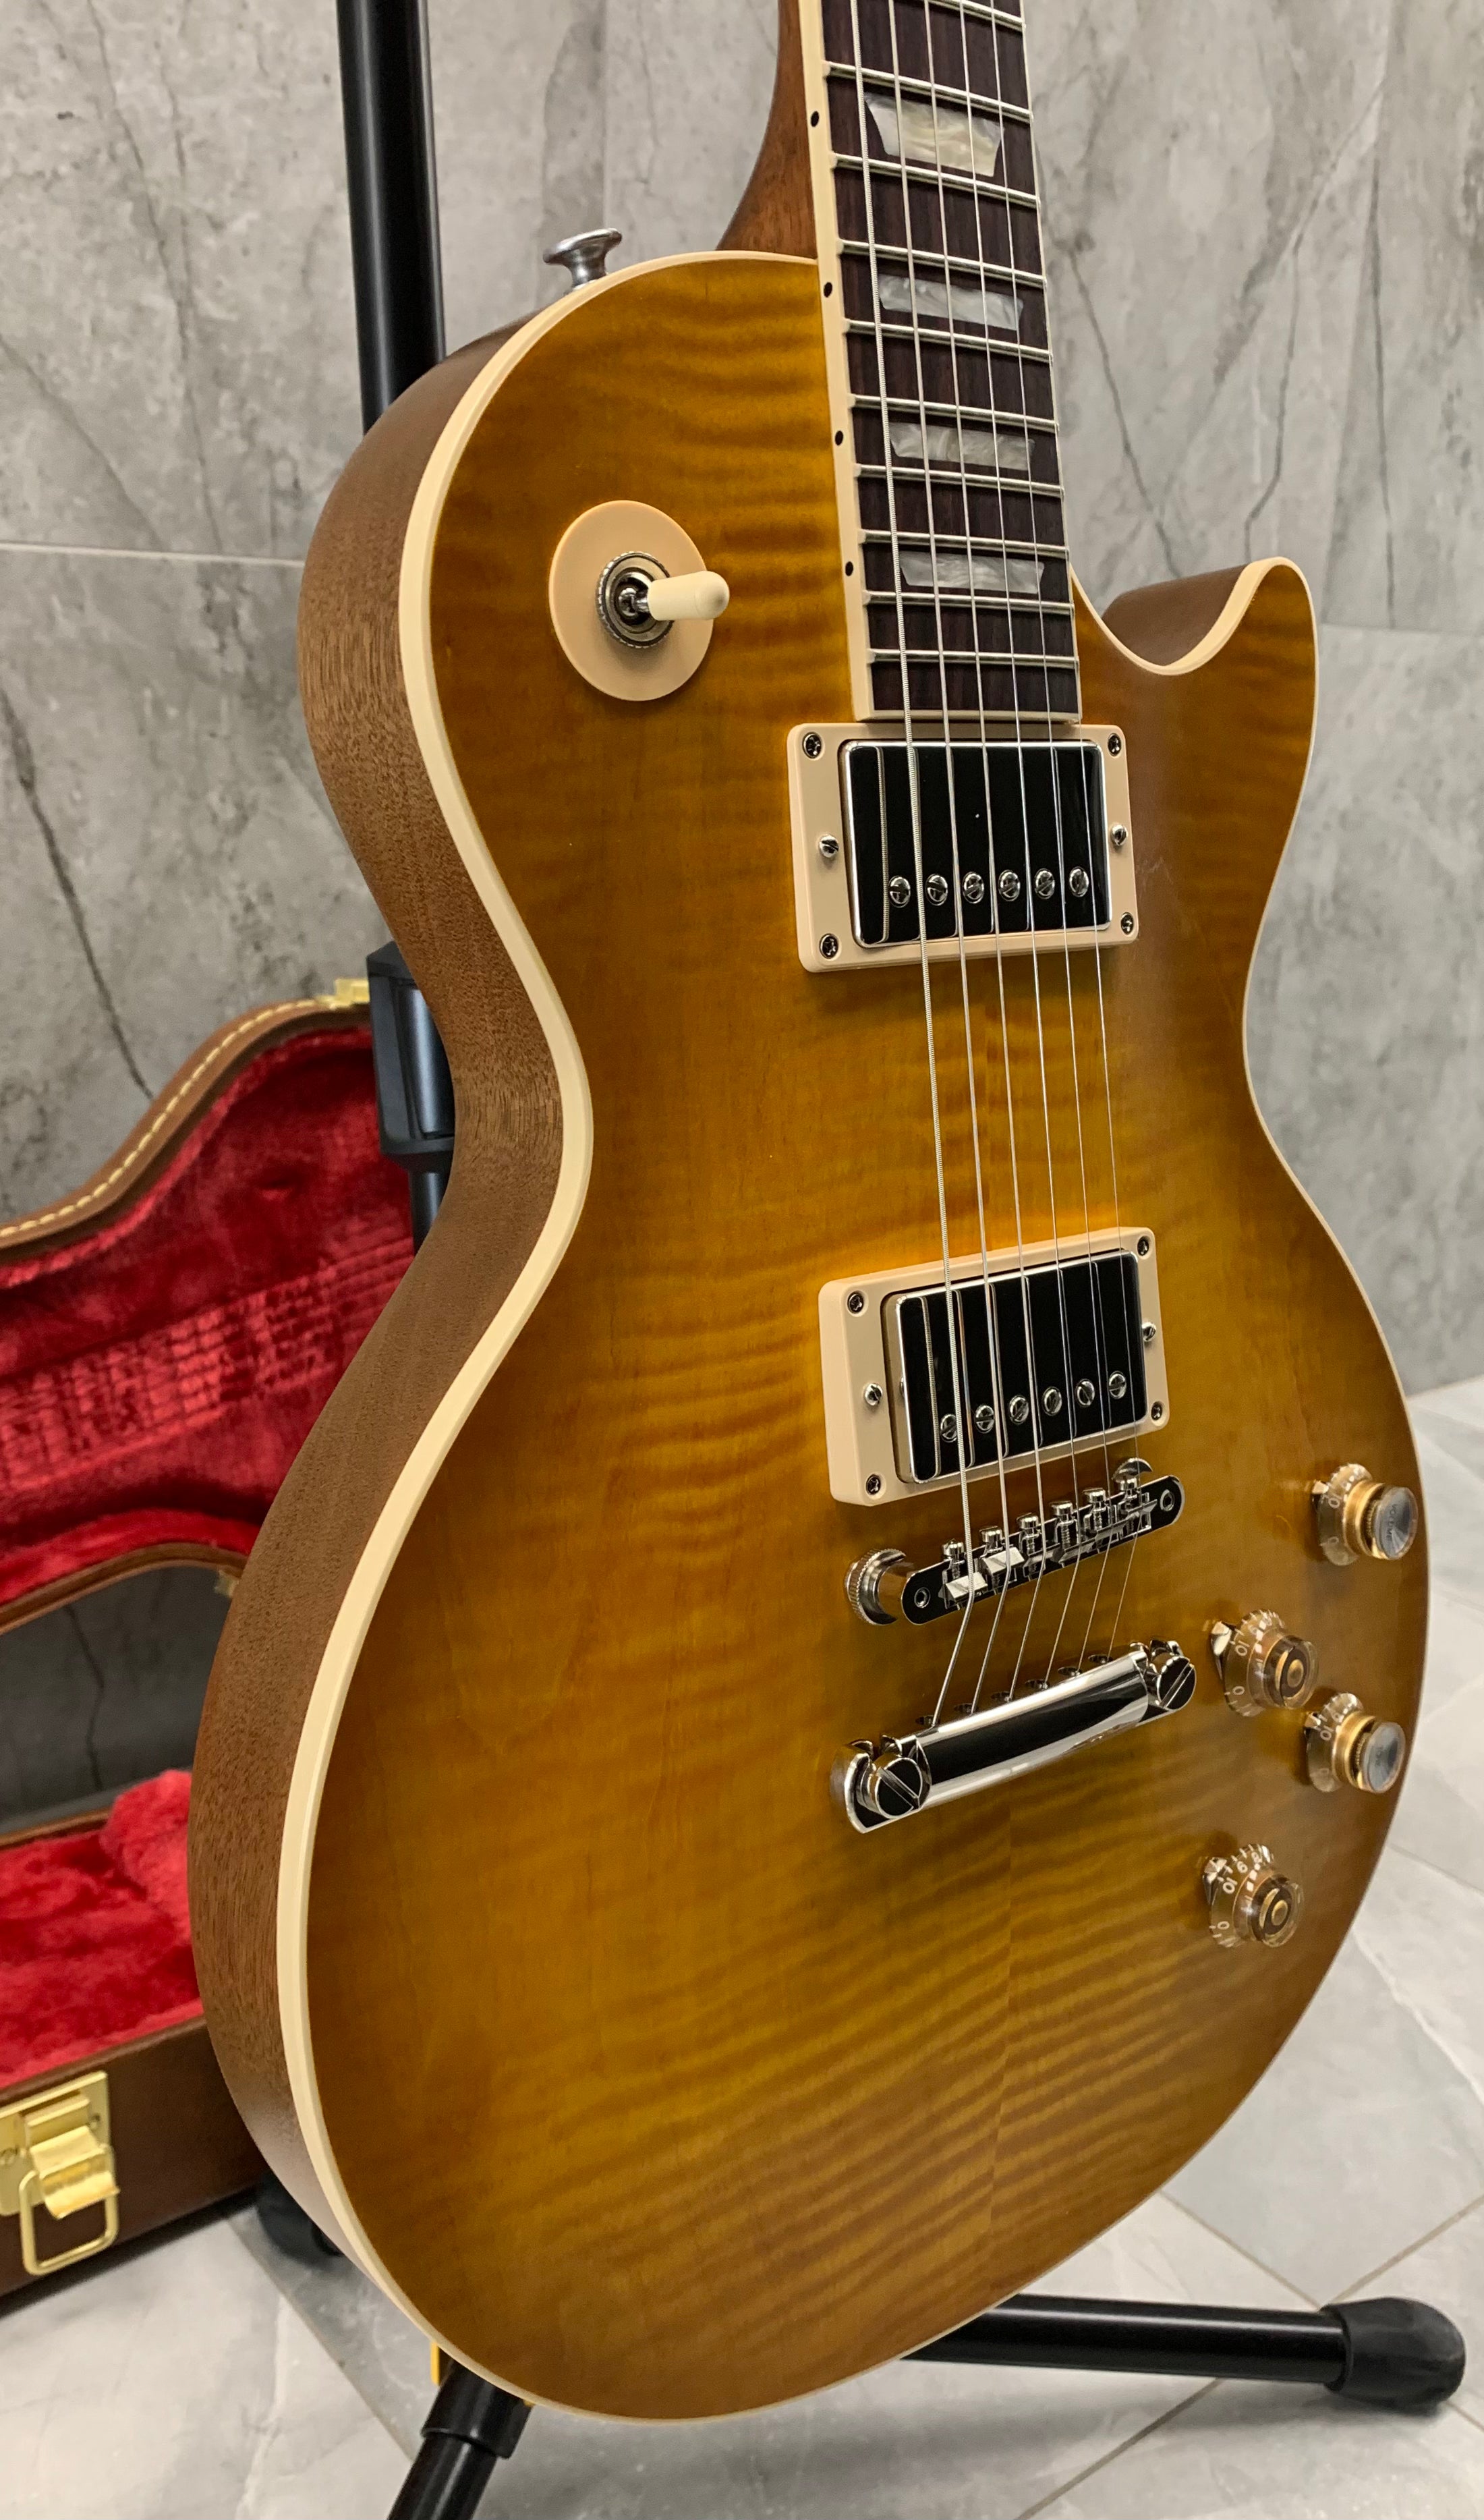 Gibson Kirk Hammett ''Greeny'' Les Paul Standard LPSKH00GGNH SERIAL NUMBER 215930355 - 9.0 LBS